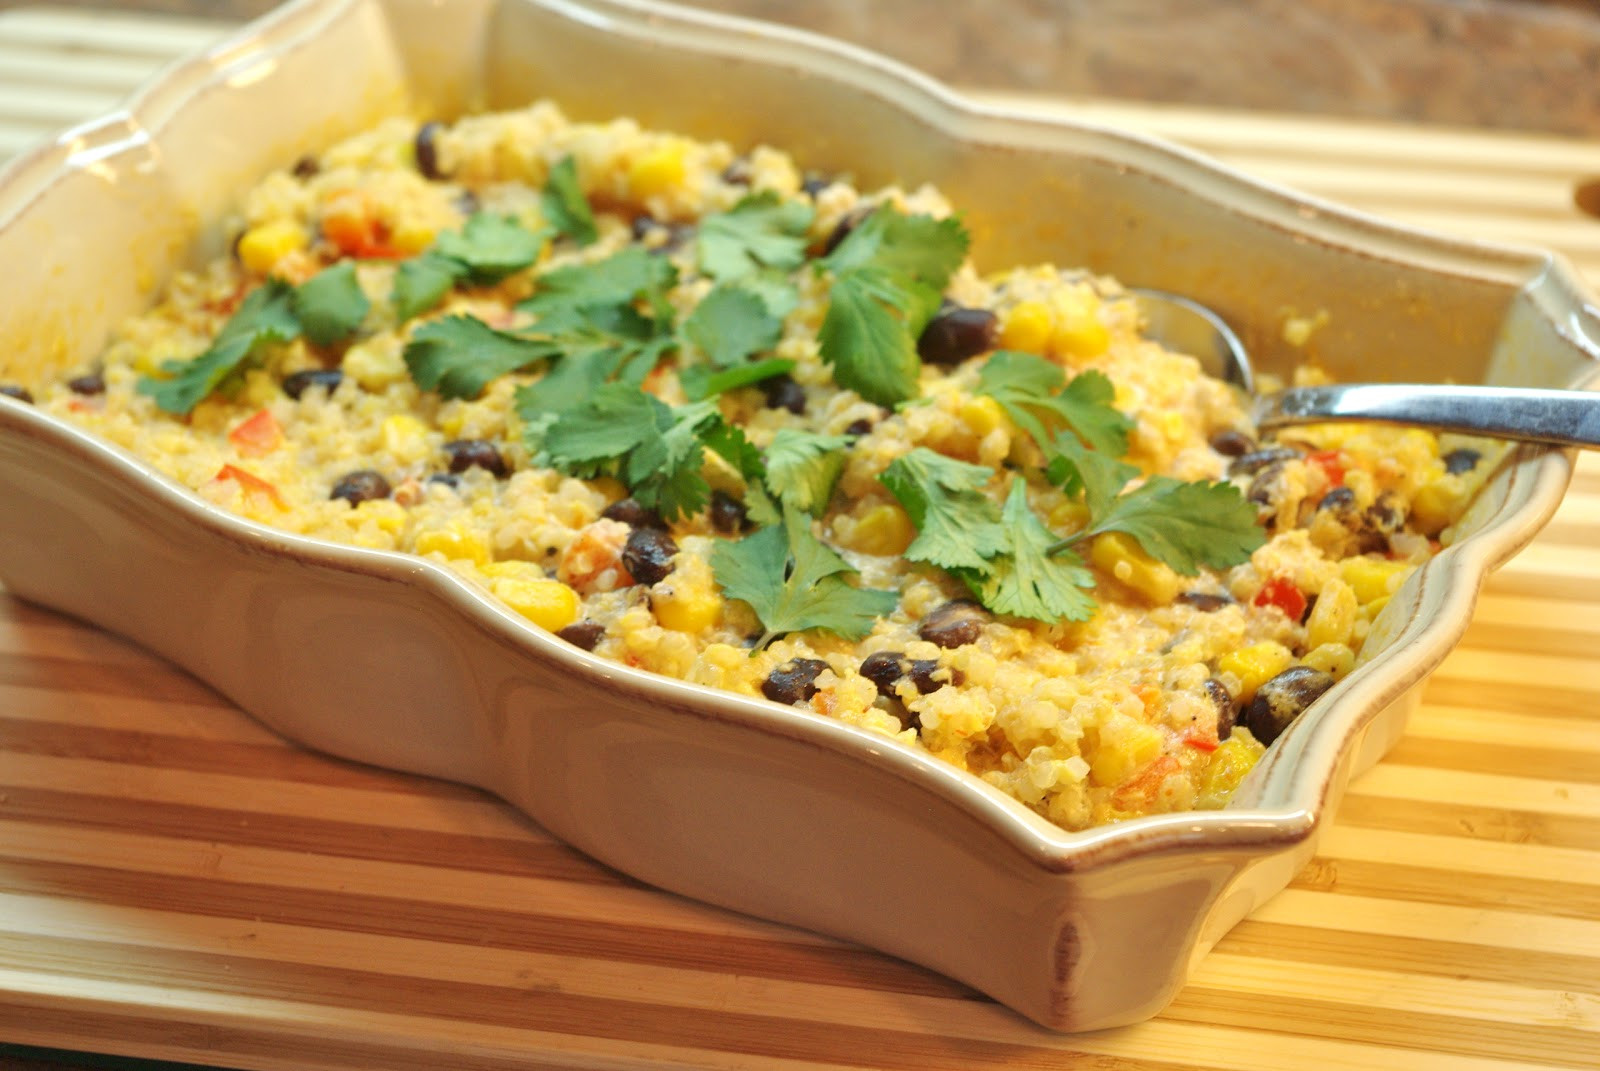 Quinoa Recipes Side Dishes
 Mennonite Girls Can Cook Quinoa Side Dish